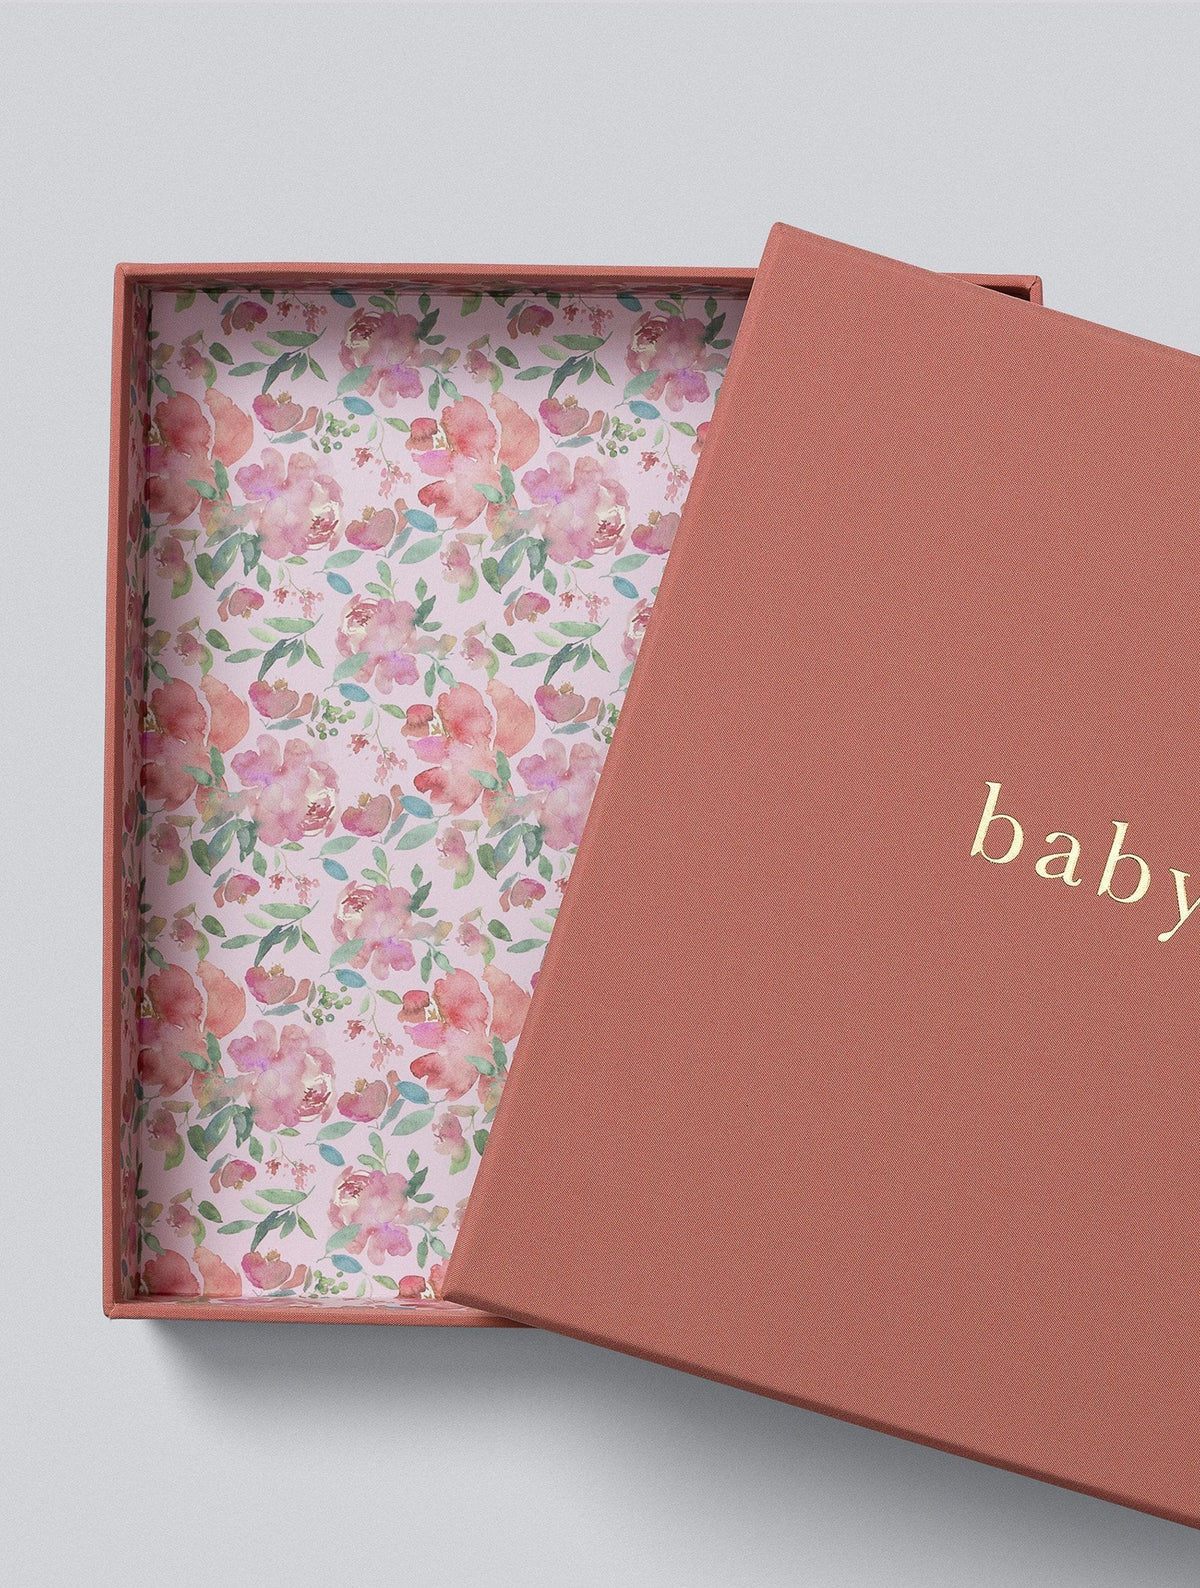 Baby Journal. Blush. Keep One Gift One Bundle